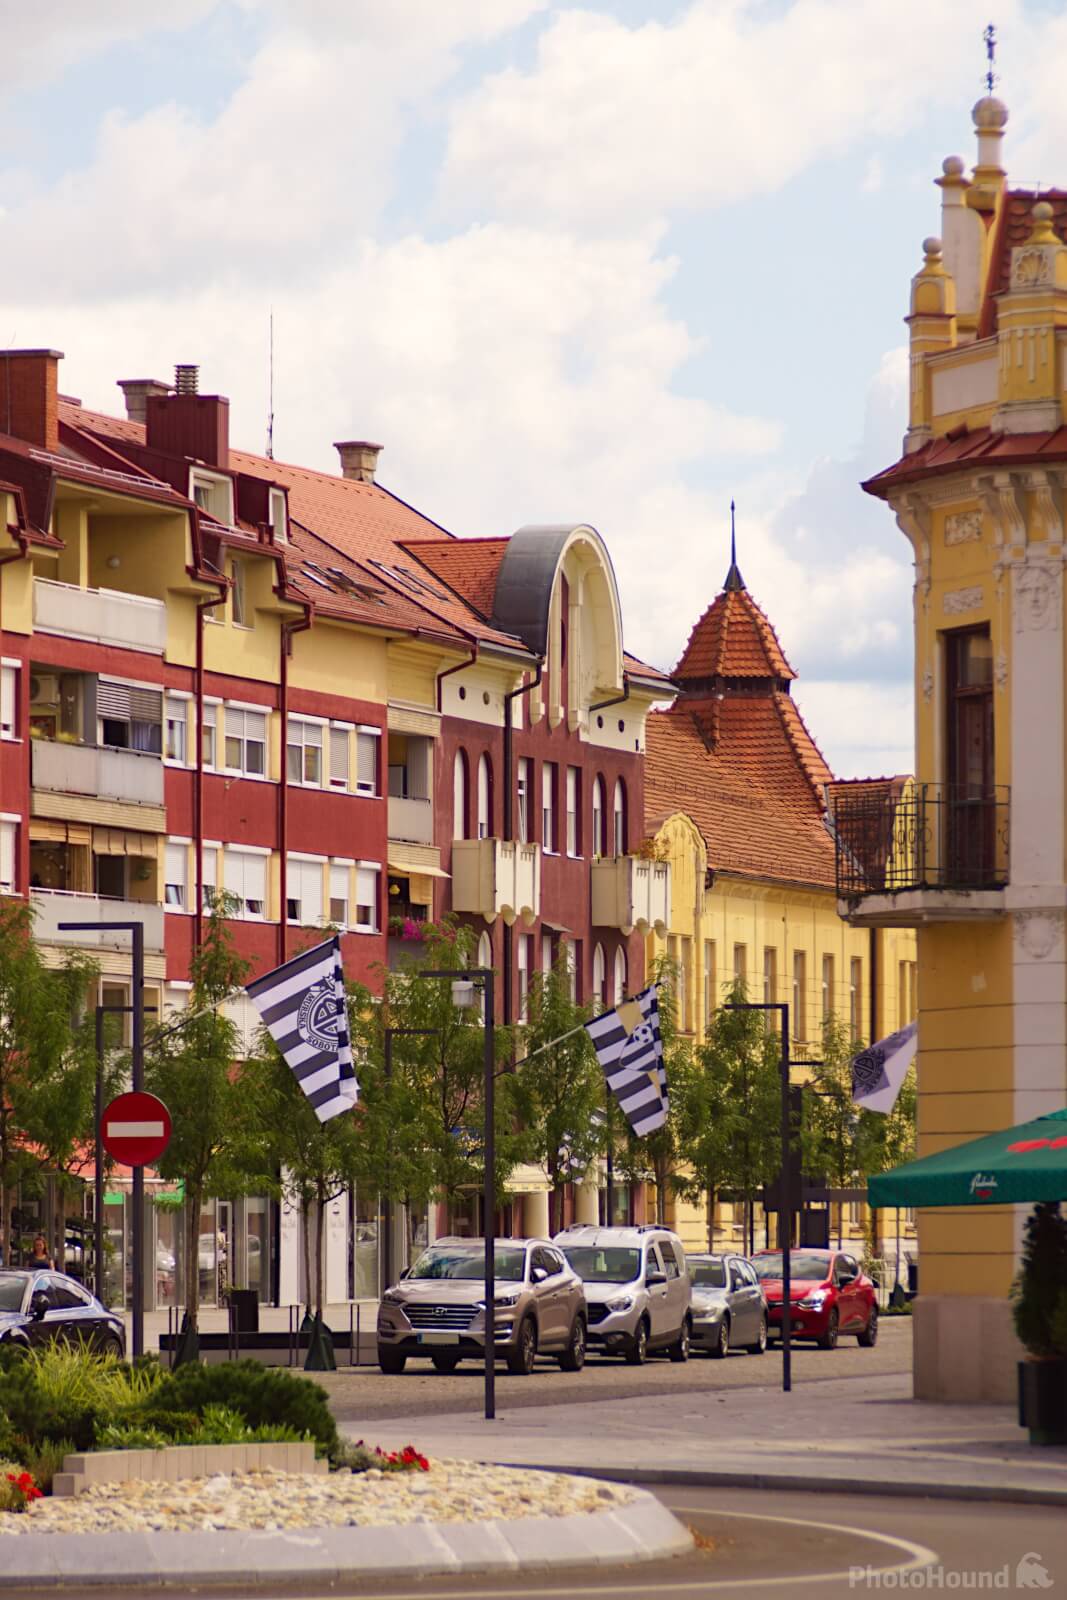 Image of Slovenska Street, Murska Sobota by Andreja Tominac